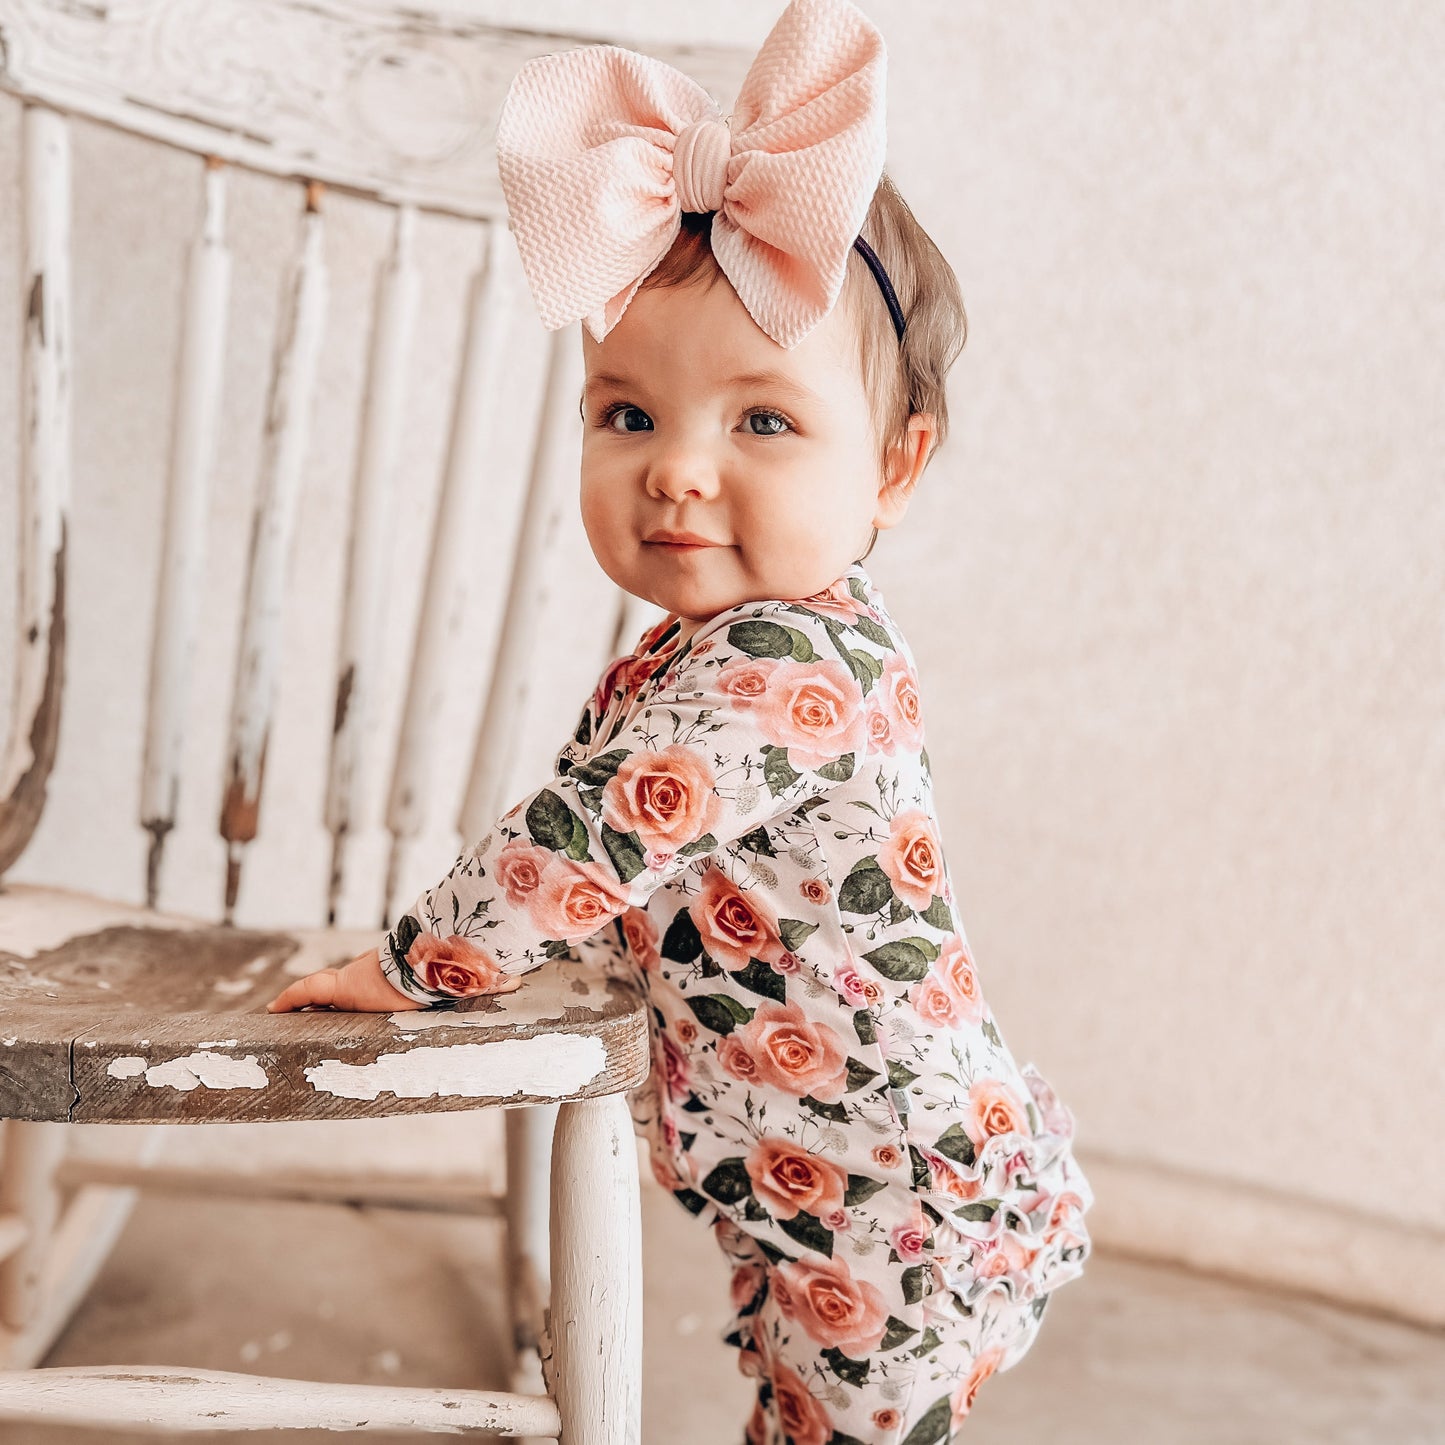 toddler baby girl wearing baby sleepers pajamas in floral print